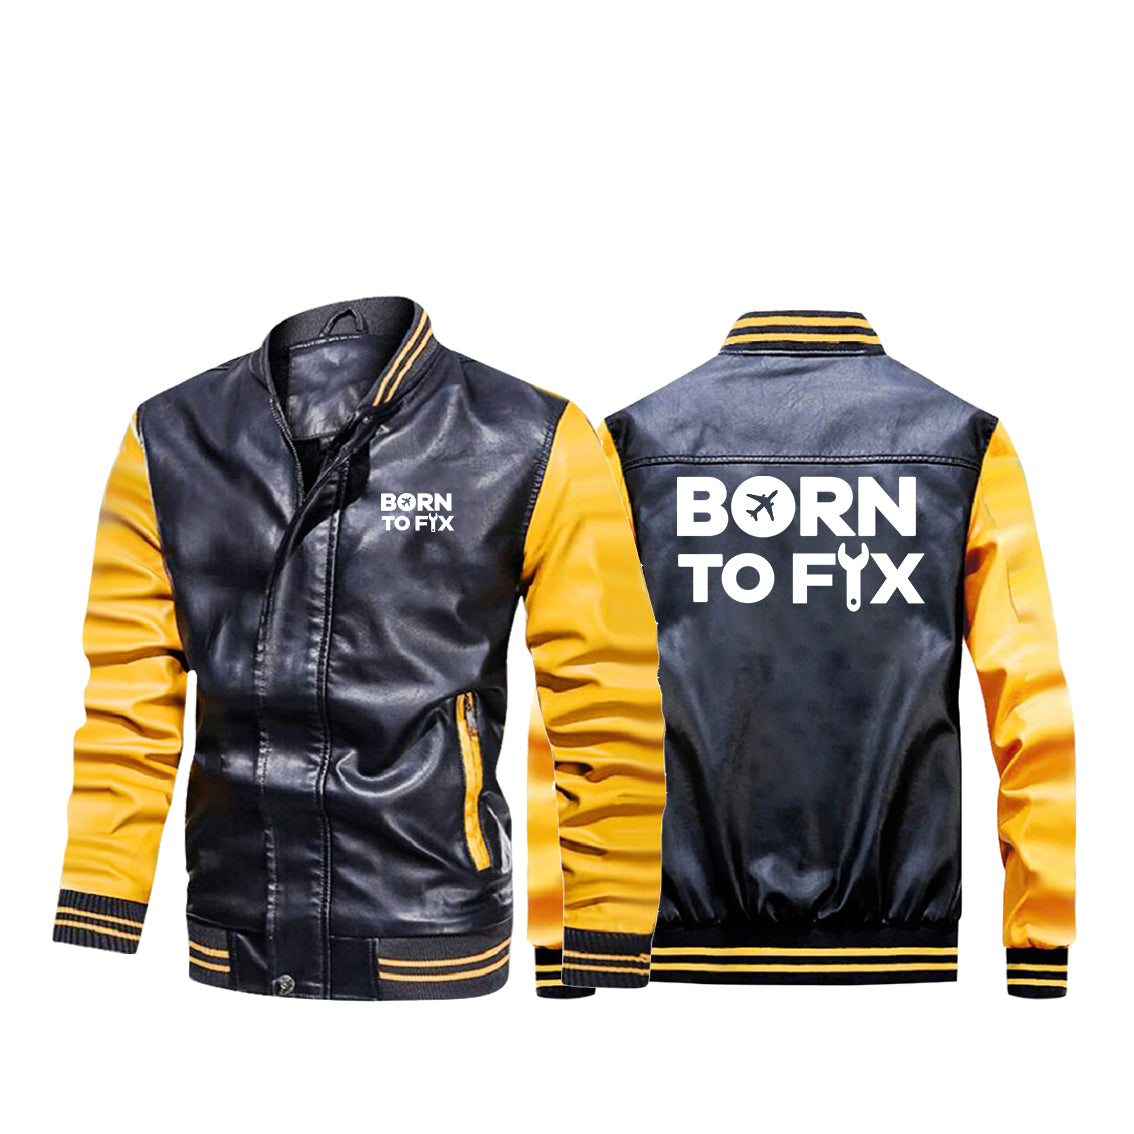 Born To Fix Airplanes Designed Stylish Leather Bomber Jackets